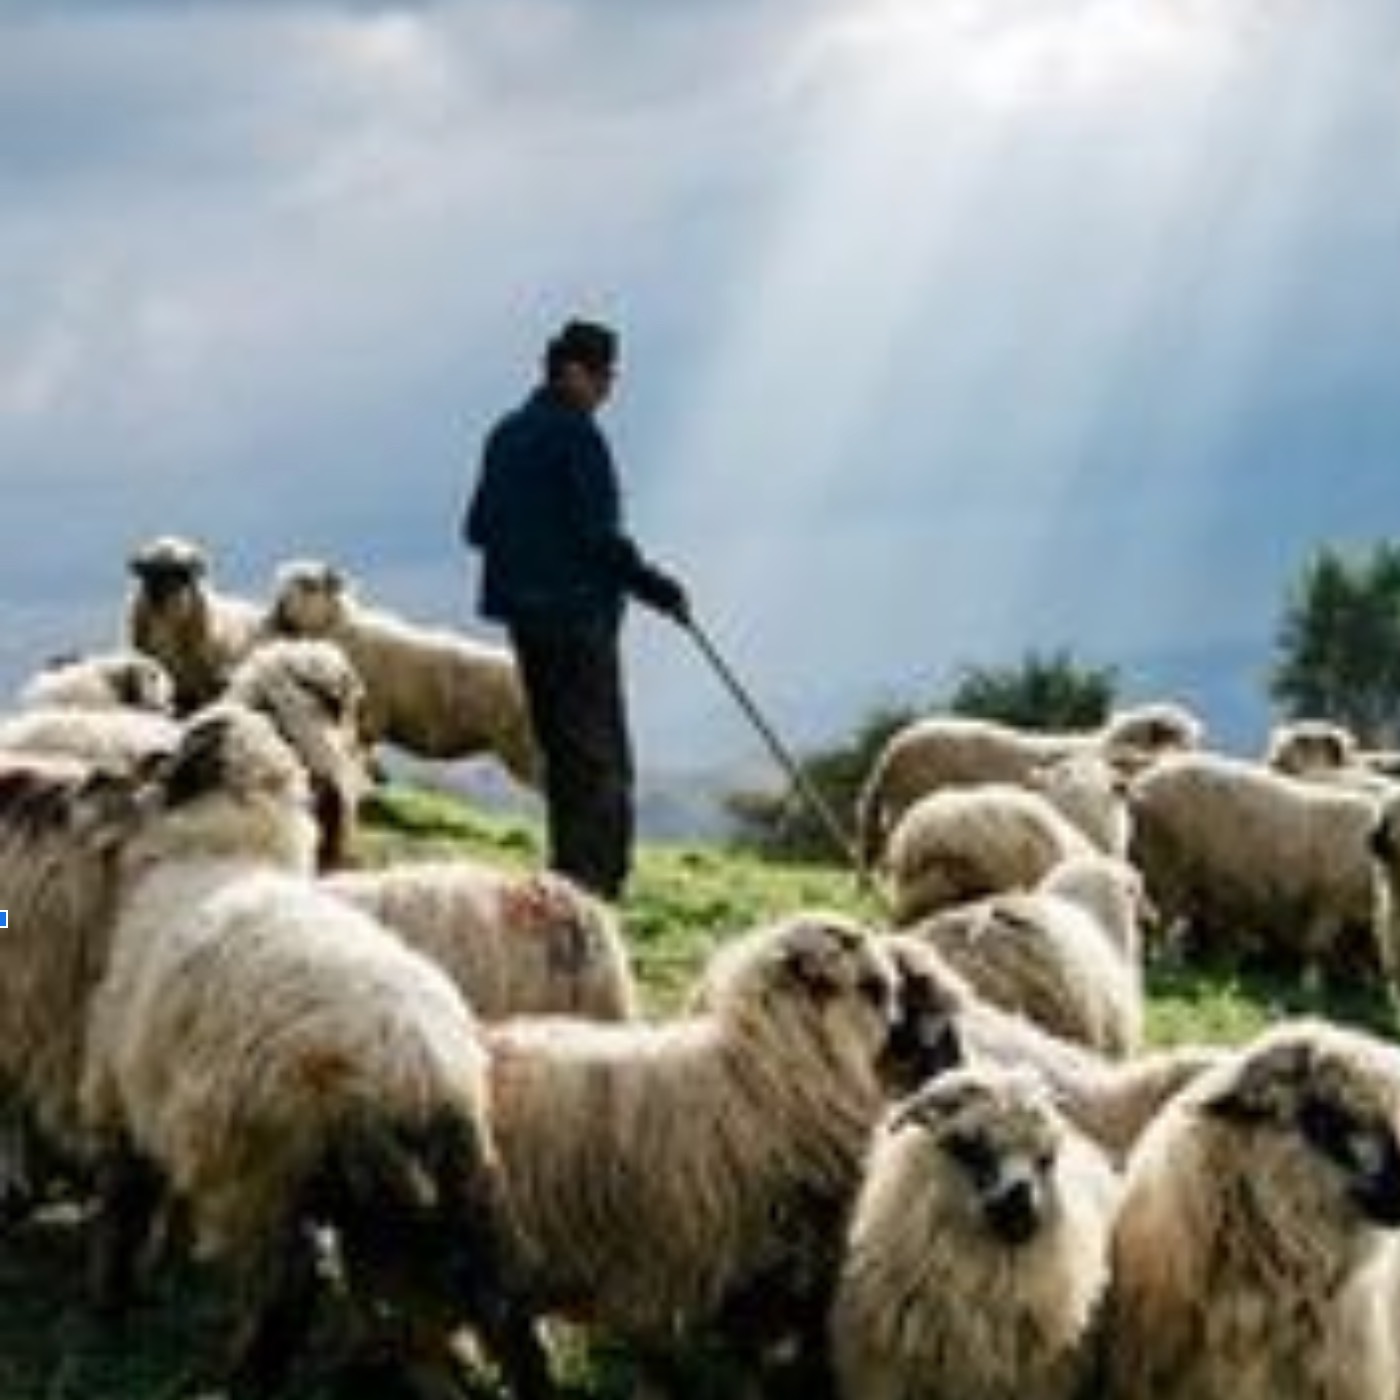 person herding sheep